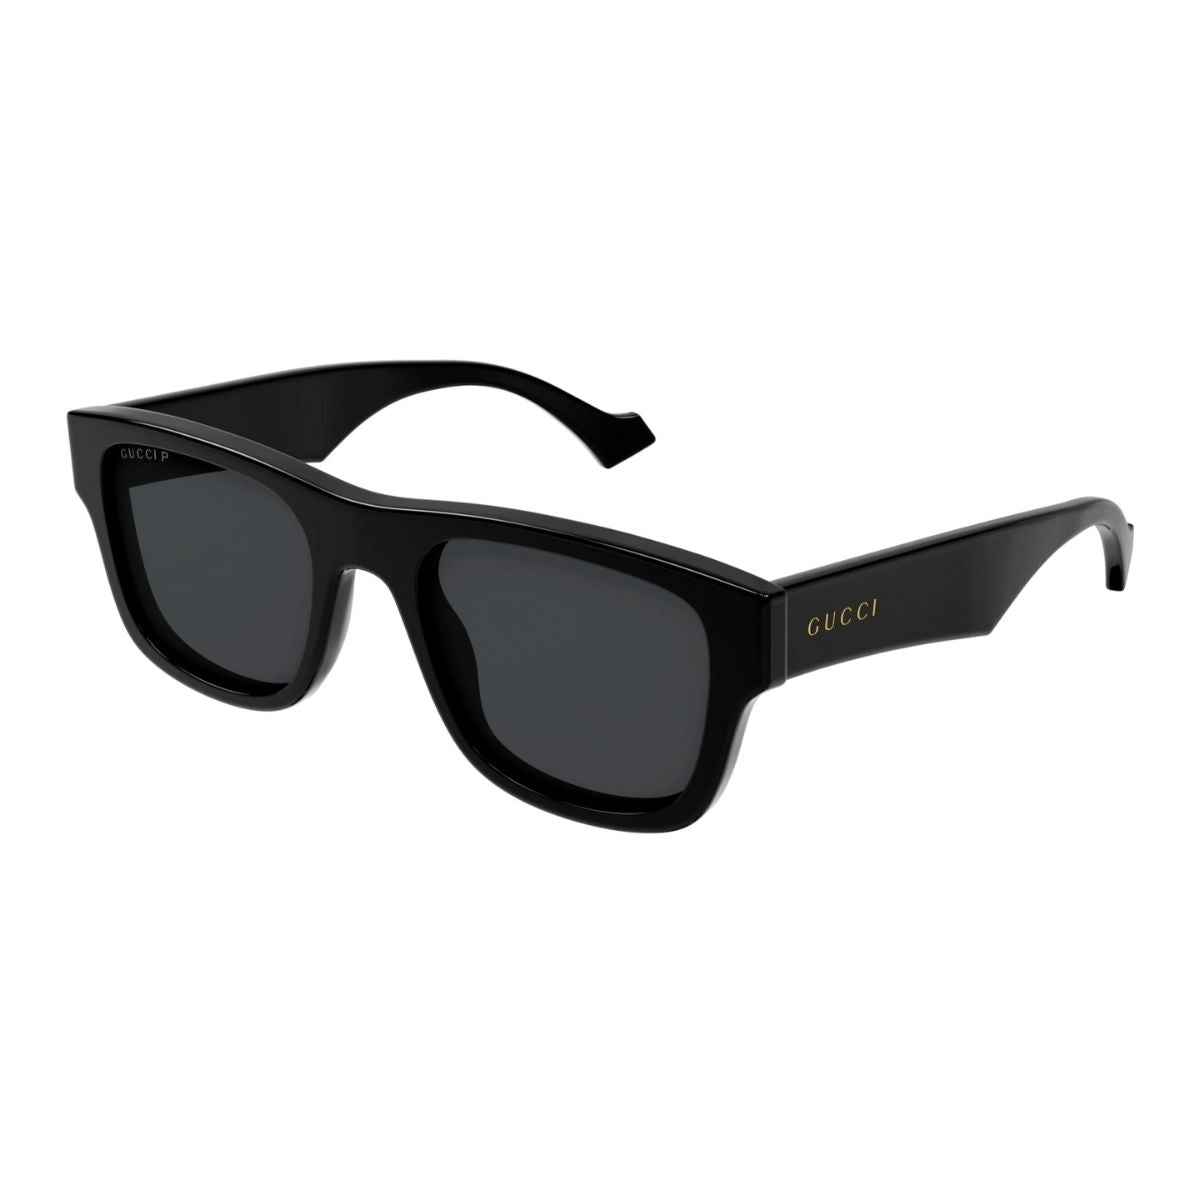 "Buy Stylish Gucci Polarized Square Sunglasses For Men's"